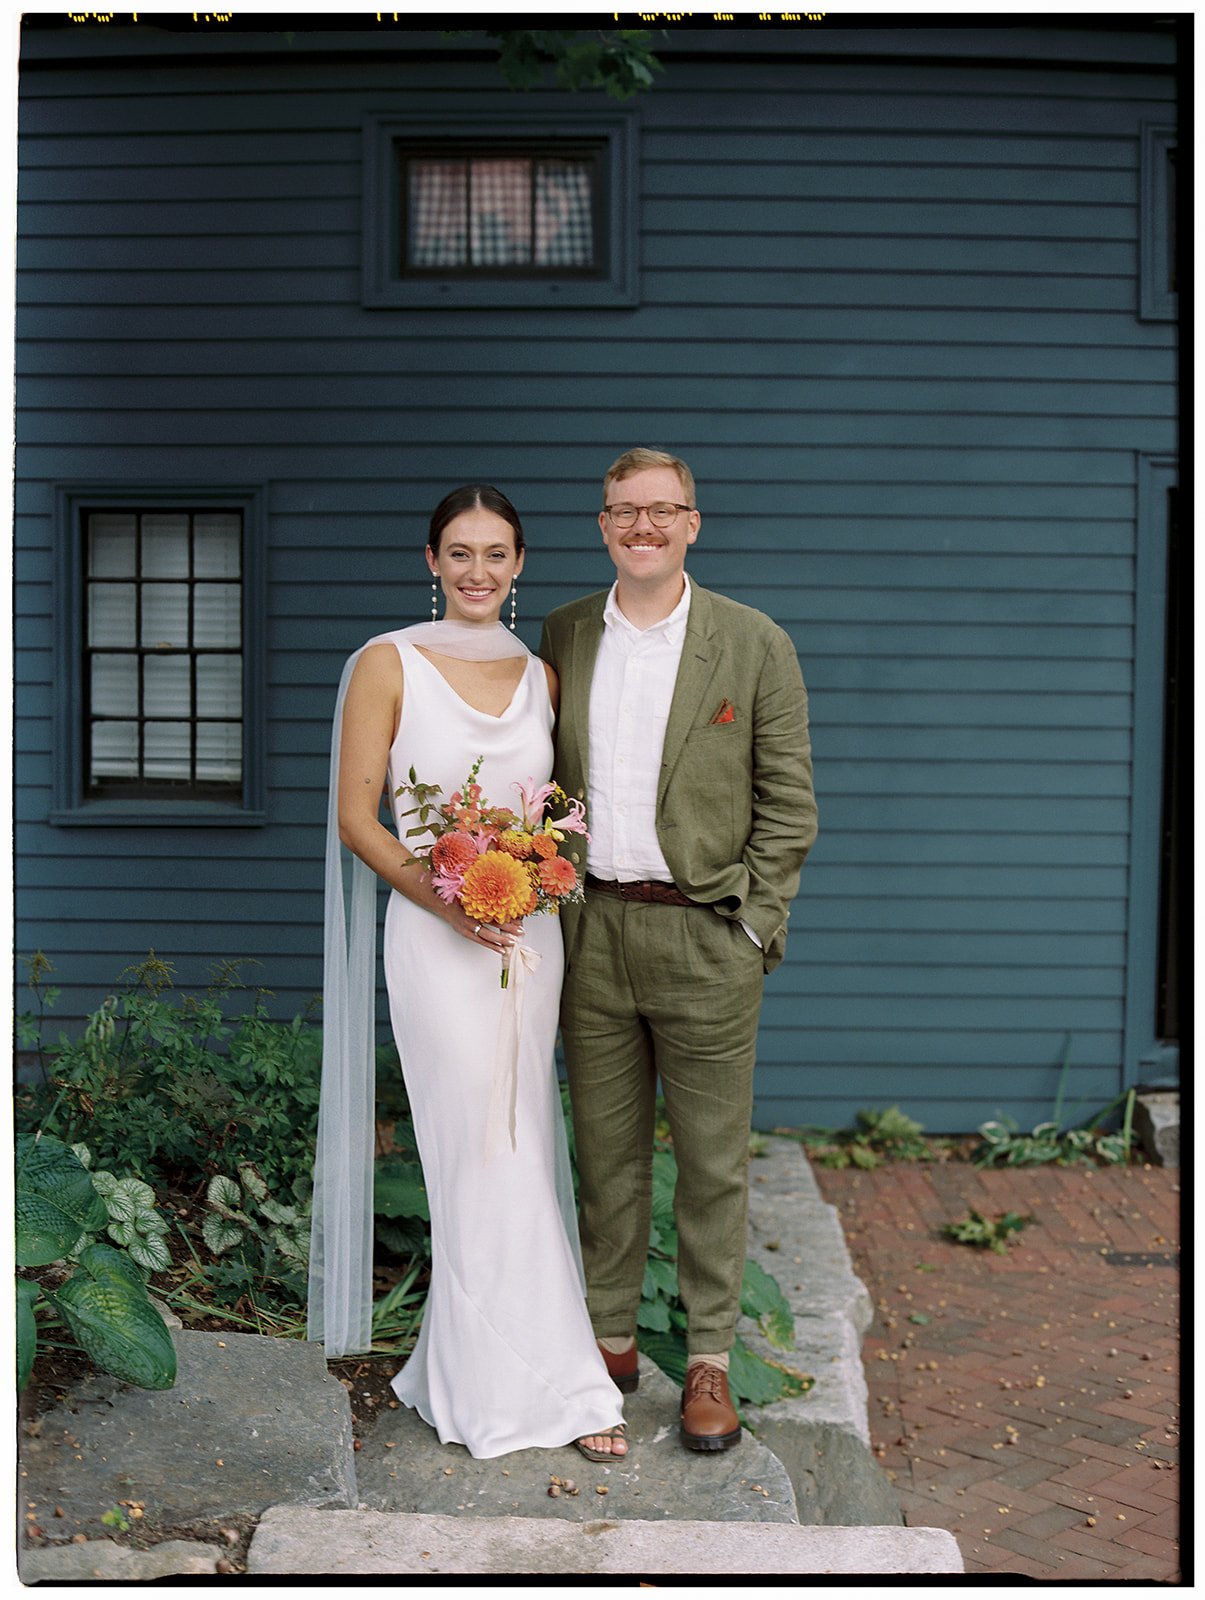 Best-Film-35mm-Austin-Wedding-Photographer-Portland-Maine-City-Hall-Super8-37.jpg